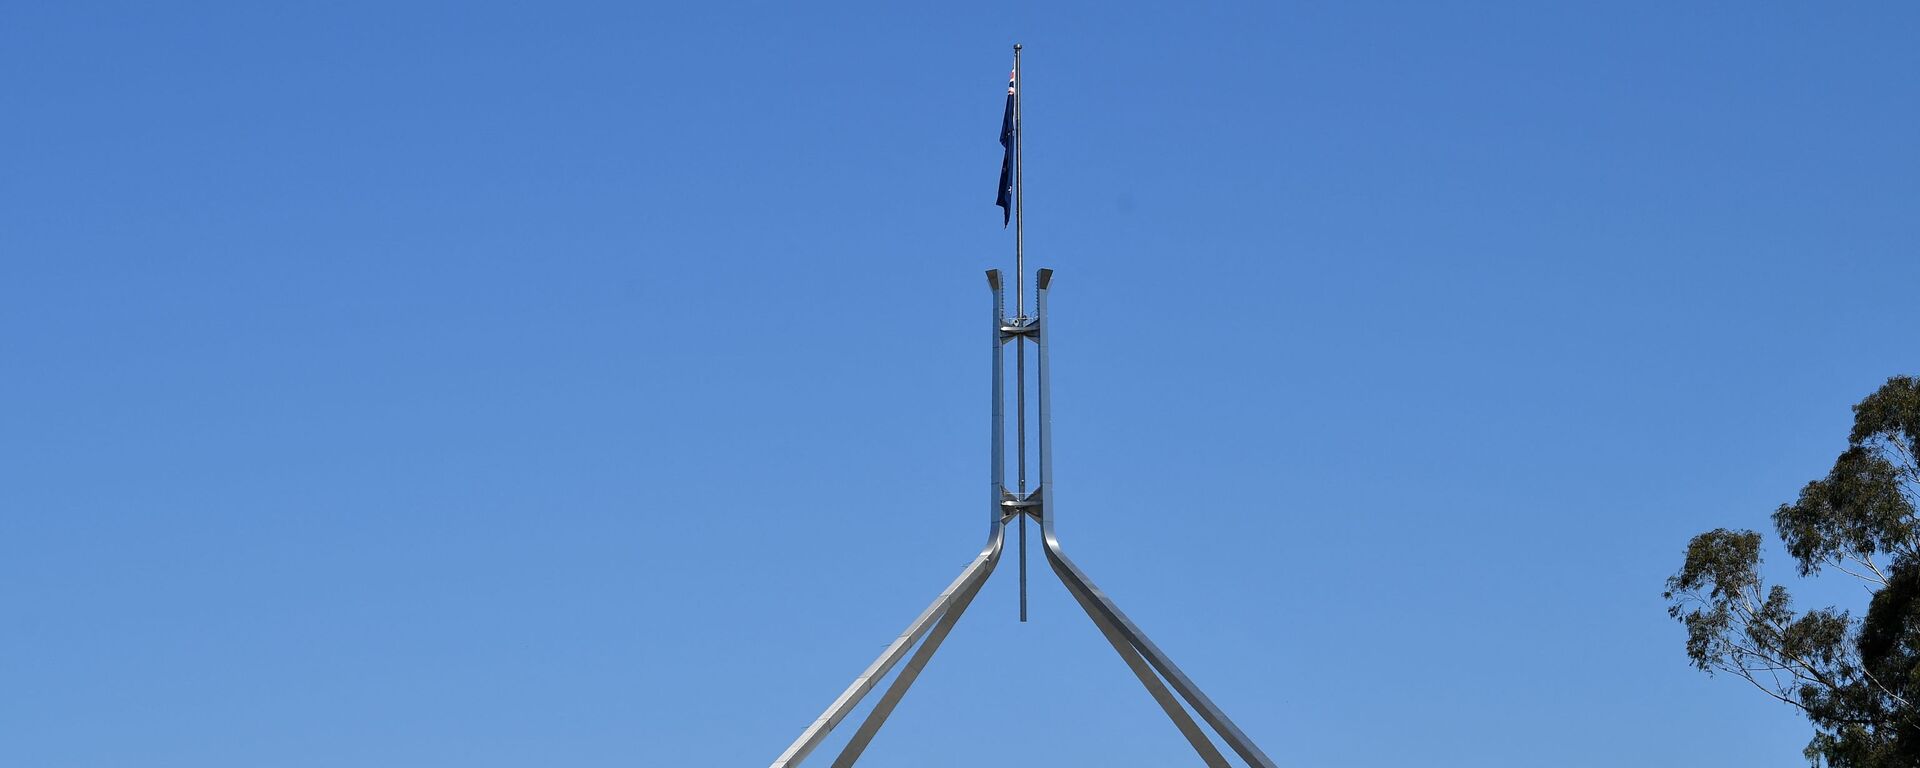 Avustralya parlamento - Sputnik Türkiye, 1920, 23.03.2021